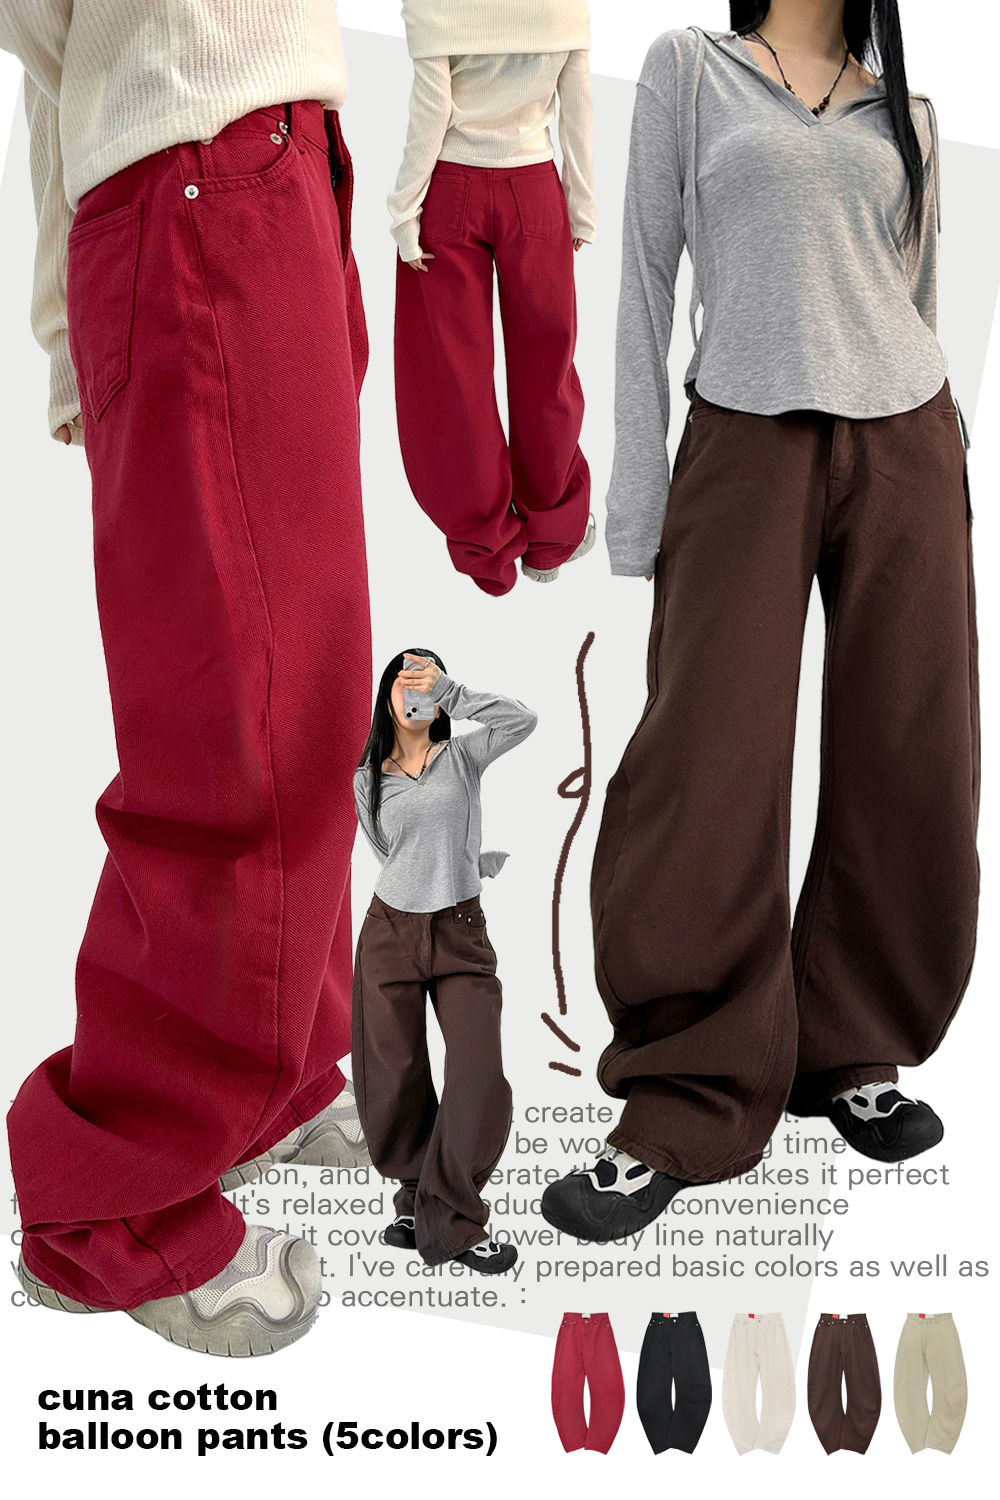 cuna cotton balloon pants (5colors)